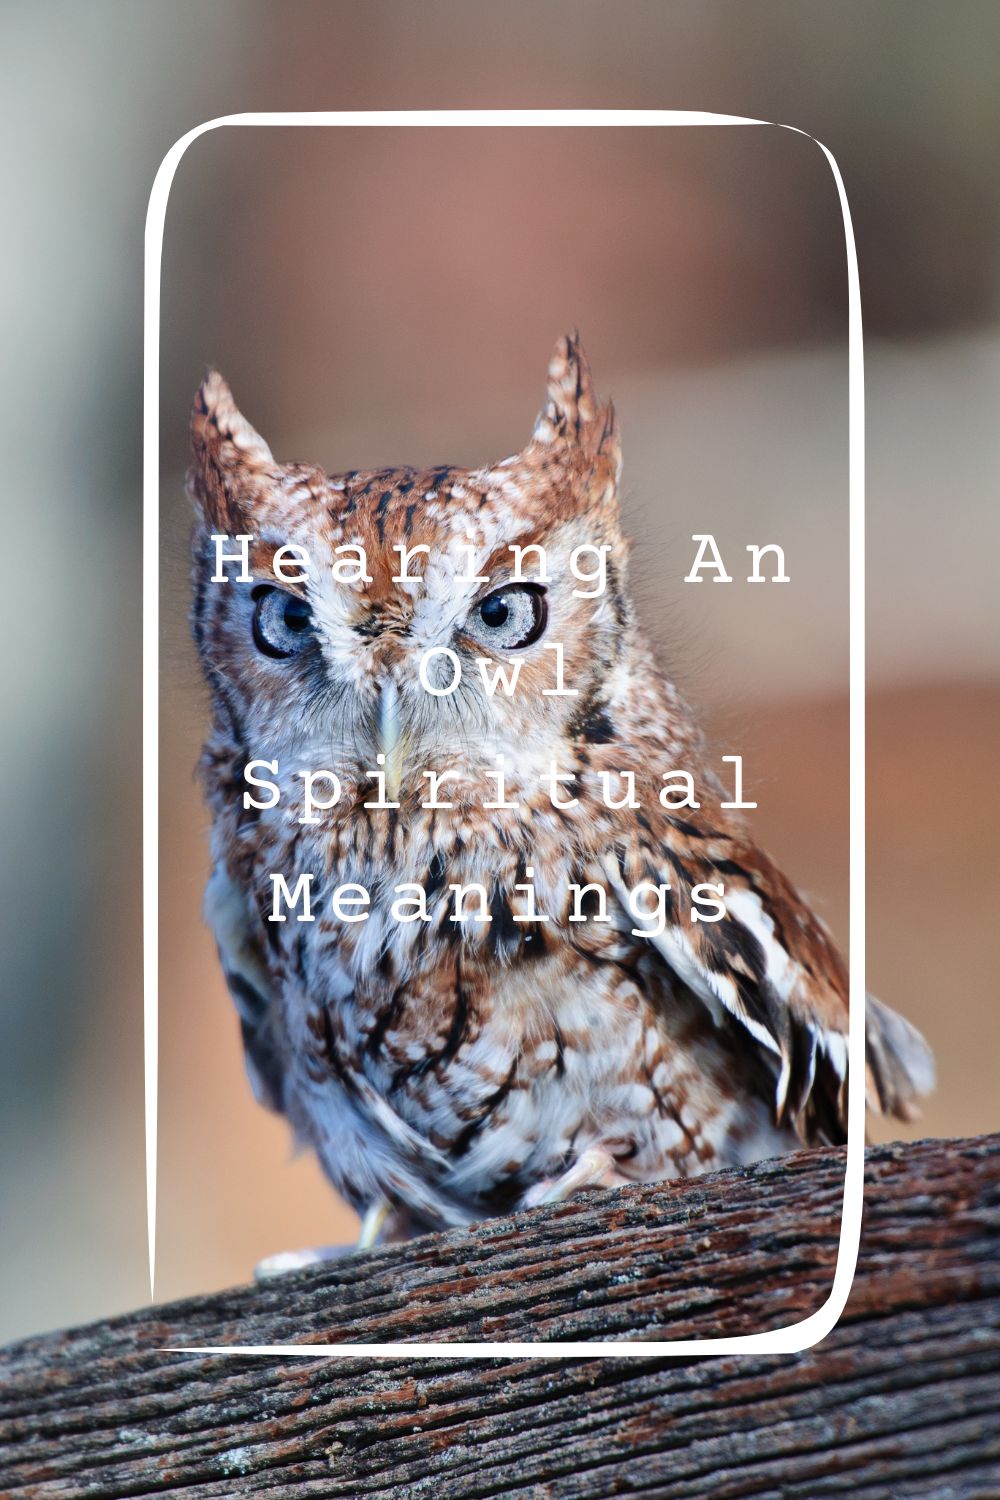 10 Hearing An Owl Spiritual Meanings4